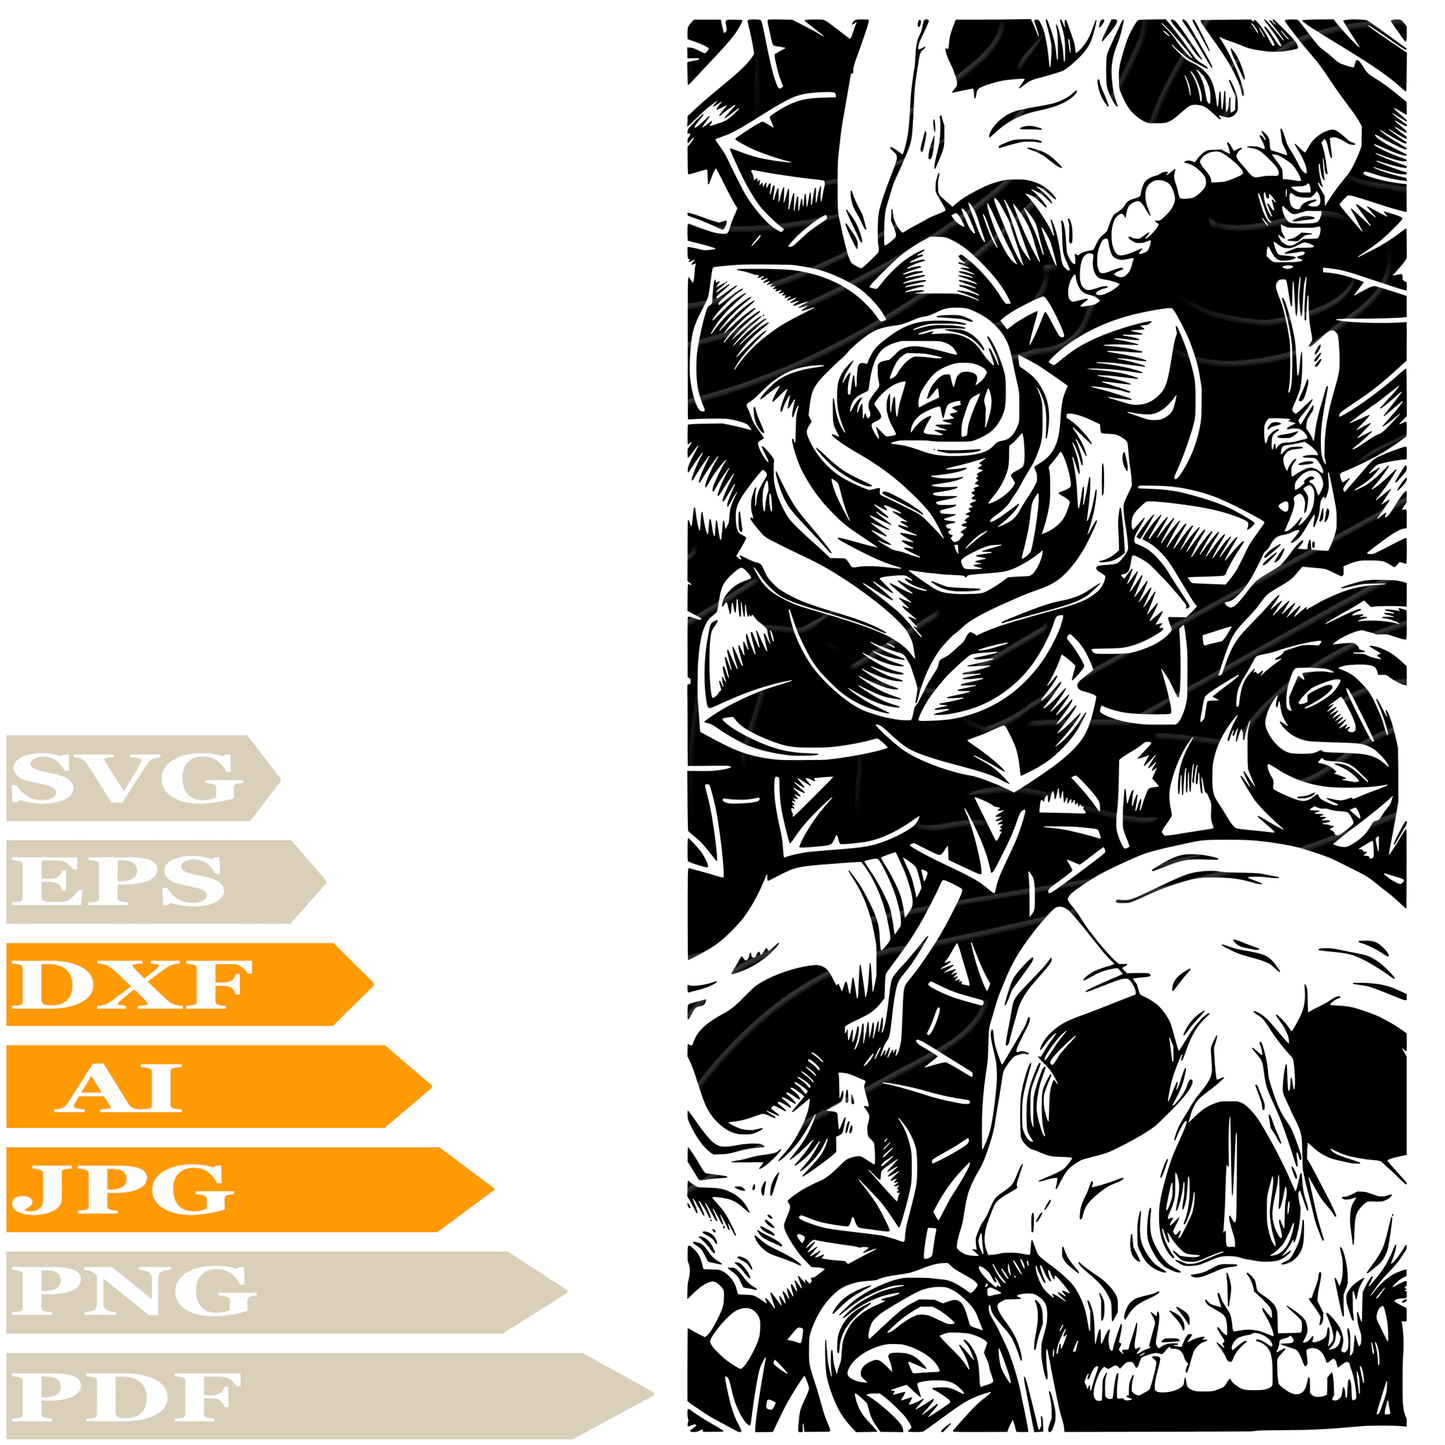 Skull SVG File, Flower Rose Human Skull SVG Design, Rose SVG, Human Skull Rose Vector Graphics, Skull PNG, For Cricut, Clipart, Cut File, Print, Digital Download, T-Shirt, Silhouette